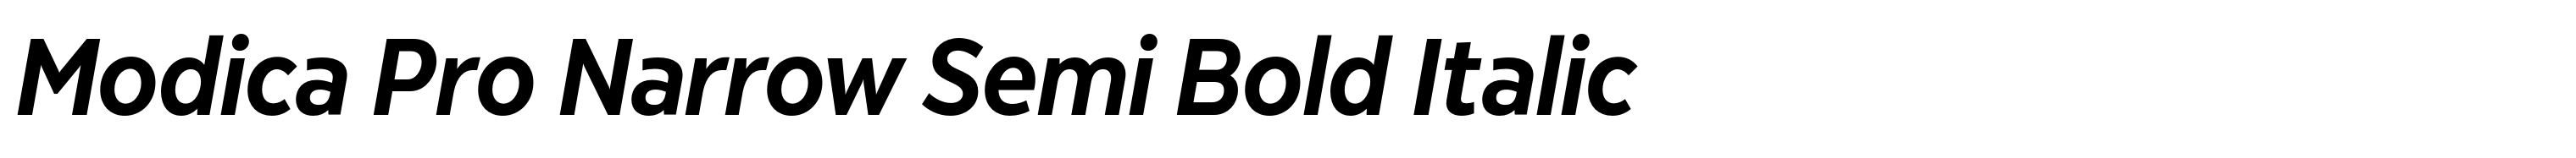 Modica Pro Narrow Semi Bold Italic